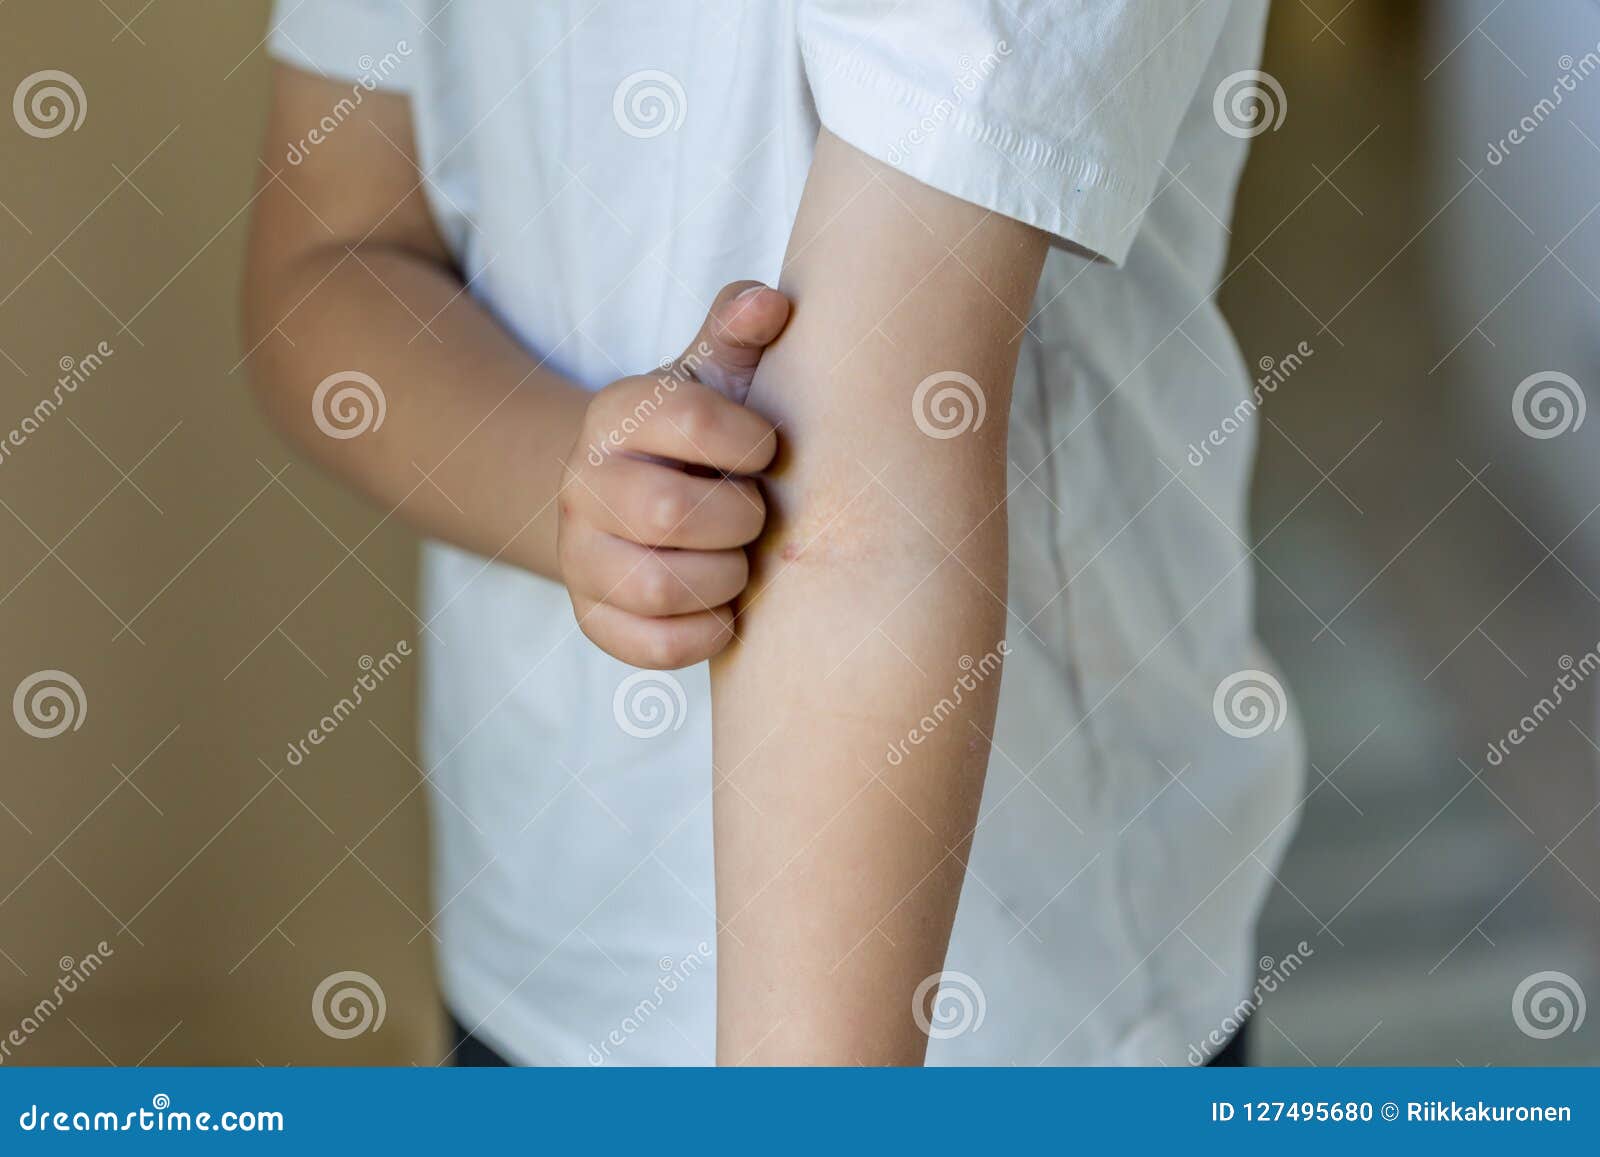 child - boy scratching his arm